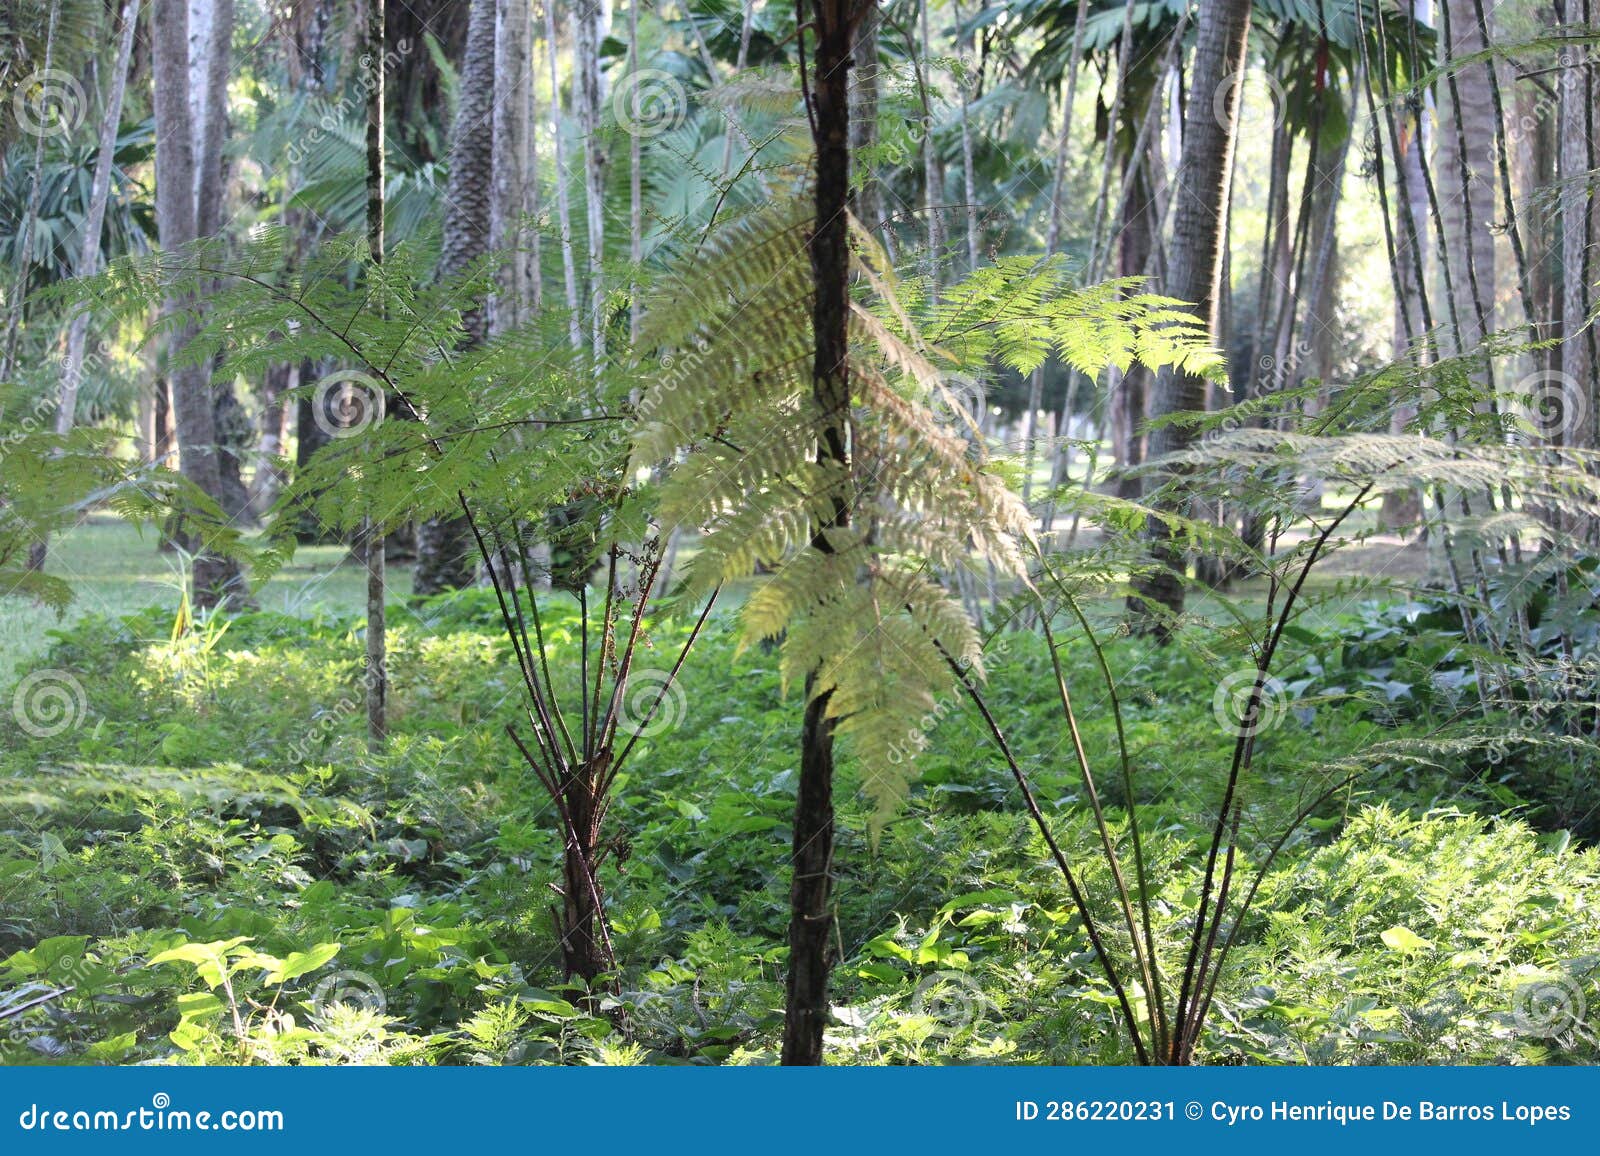 west indian treefern background photo, cyathea arborea, palo camarÃ³n, american species, introduced ornamental species